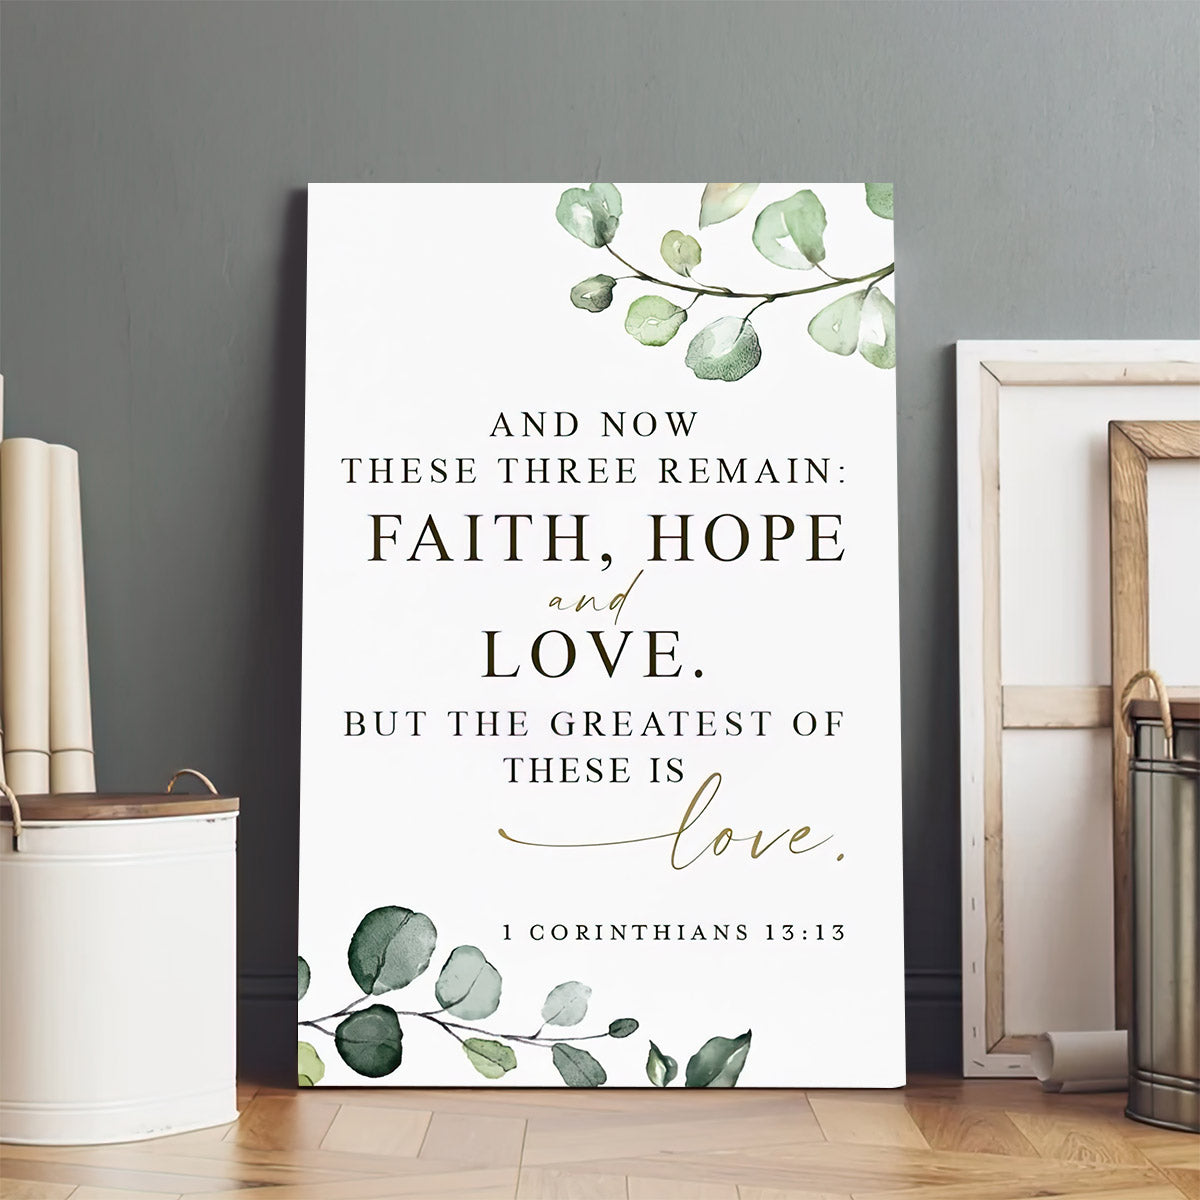 Faith, Hope And Love Painting On Canvas - 1 Corinthians 13 13 Poster Decor Art